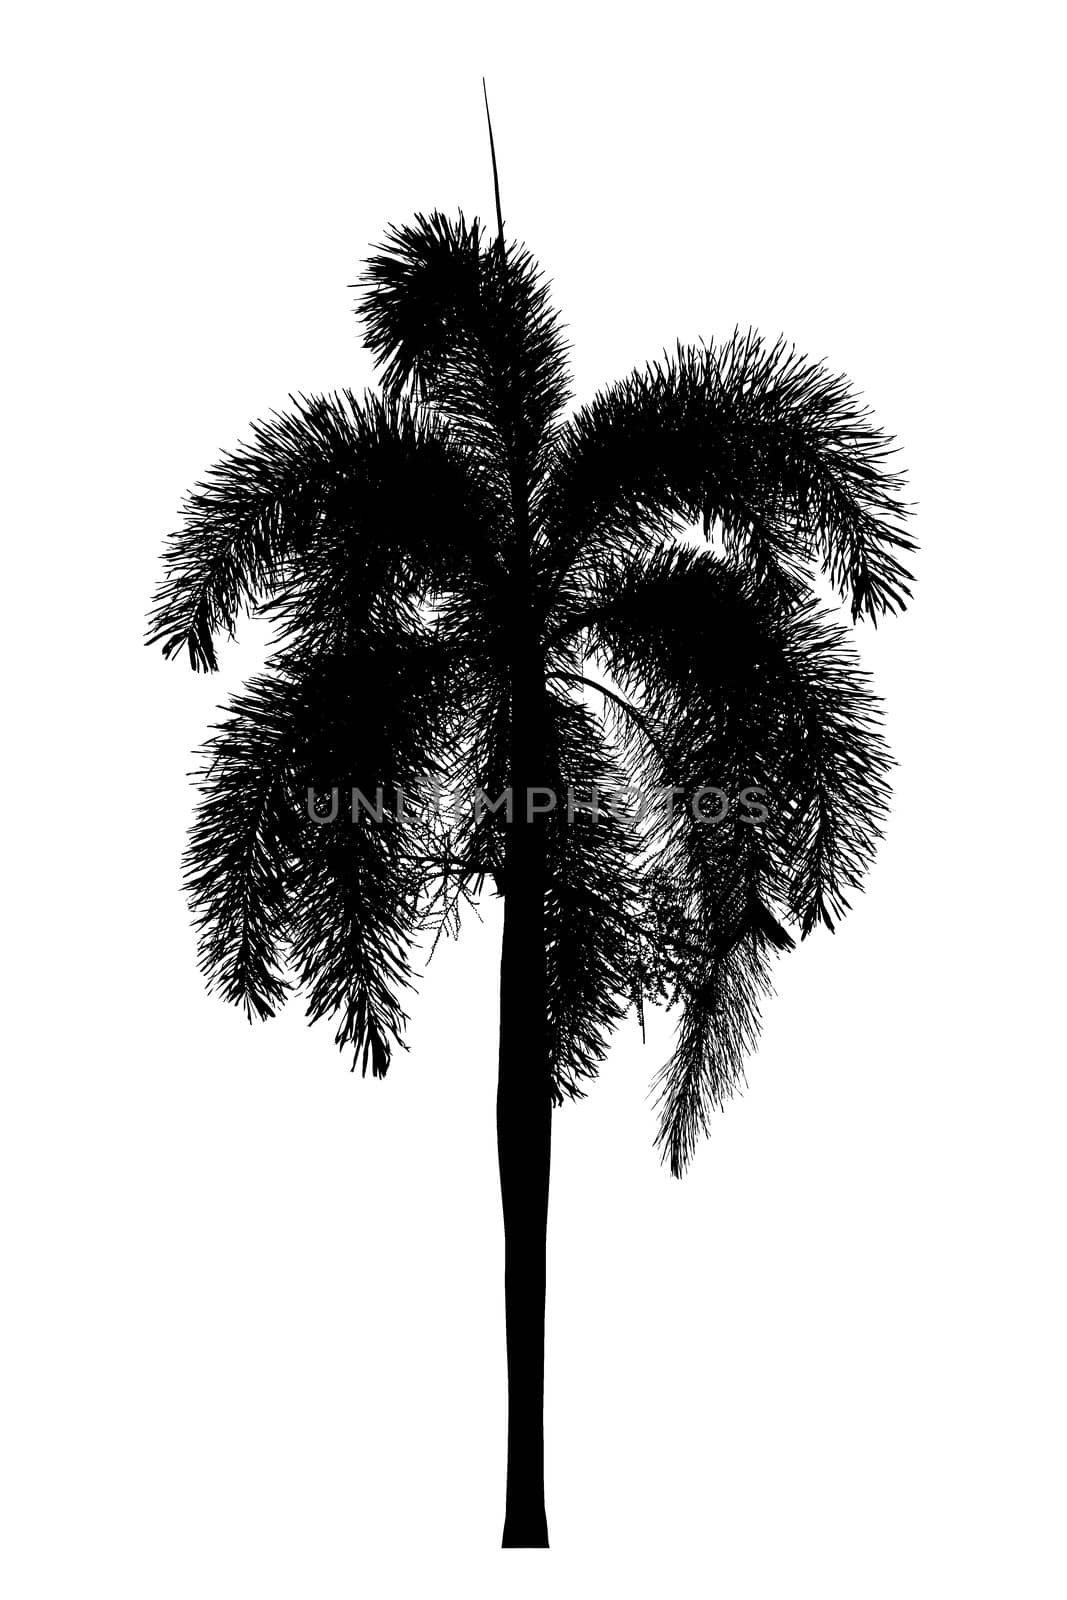 Palm tree silhouette Ornamental plants beautiful on white background by pramot